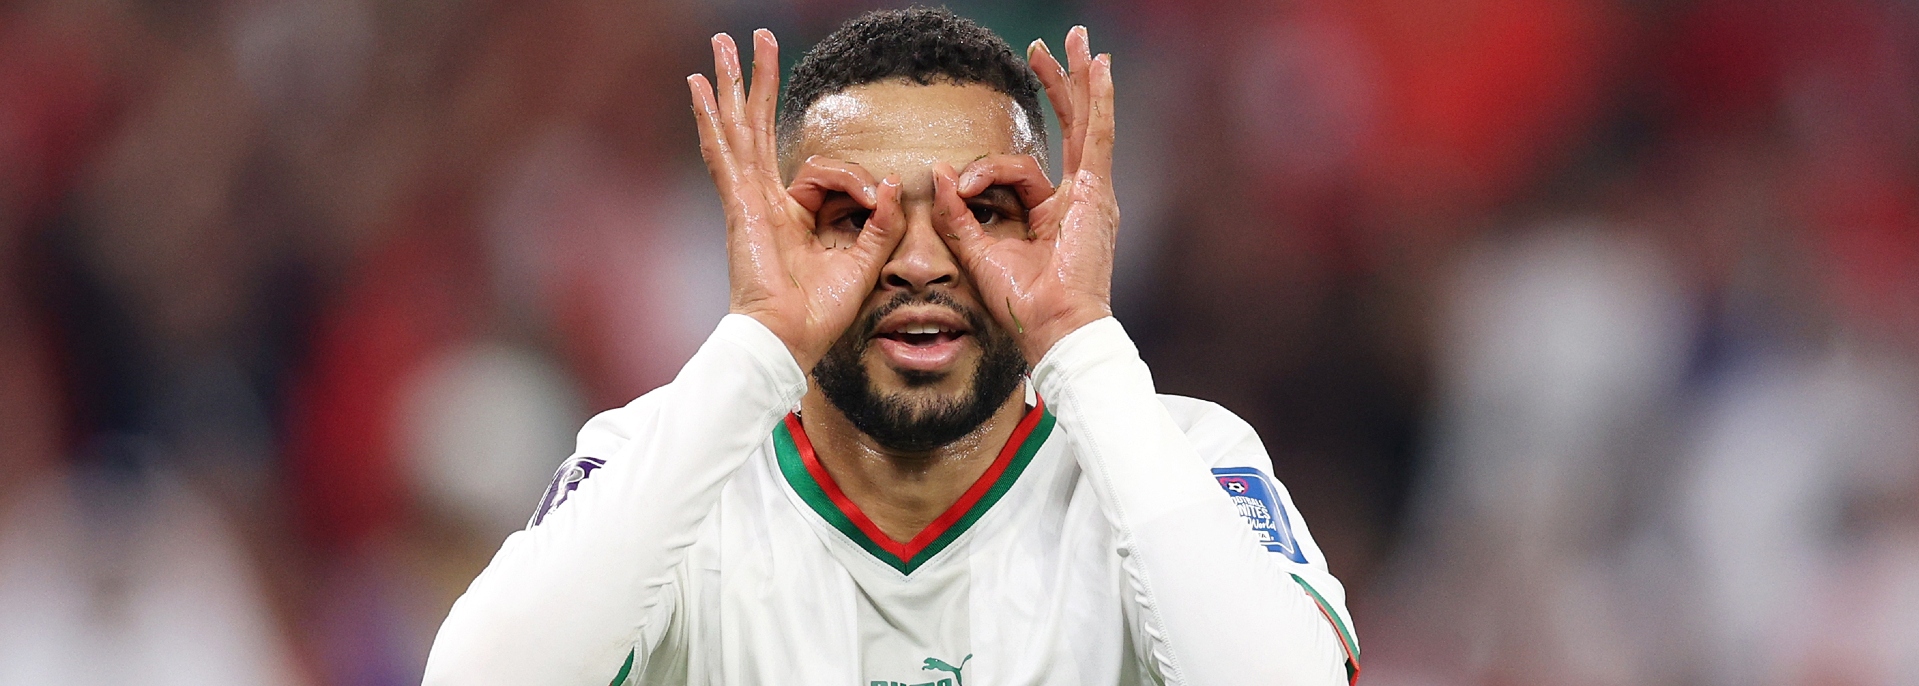 Allez Le Maroc—World Cup 22